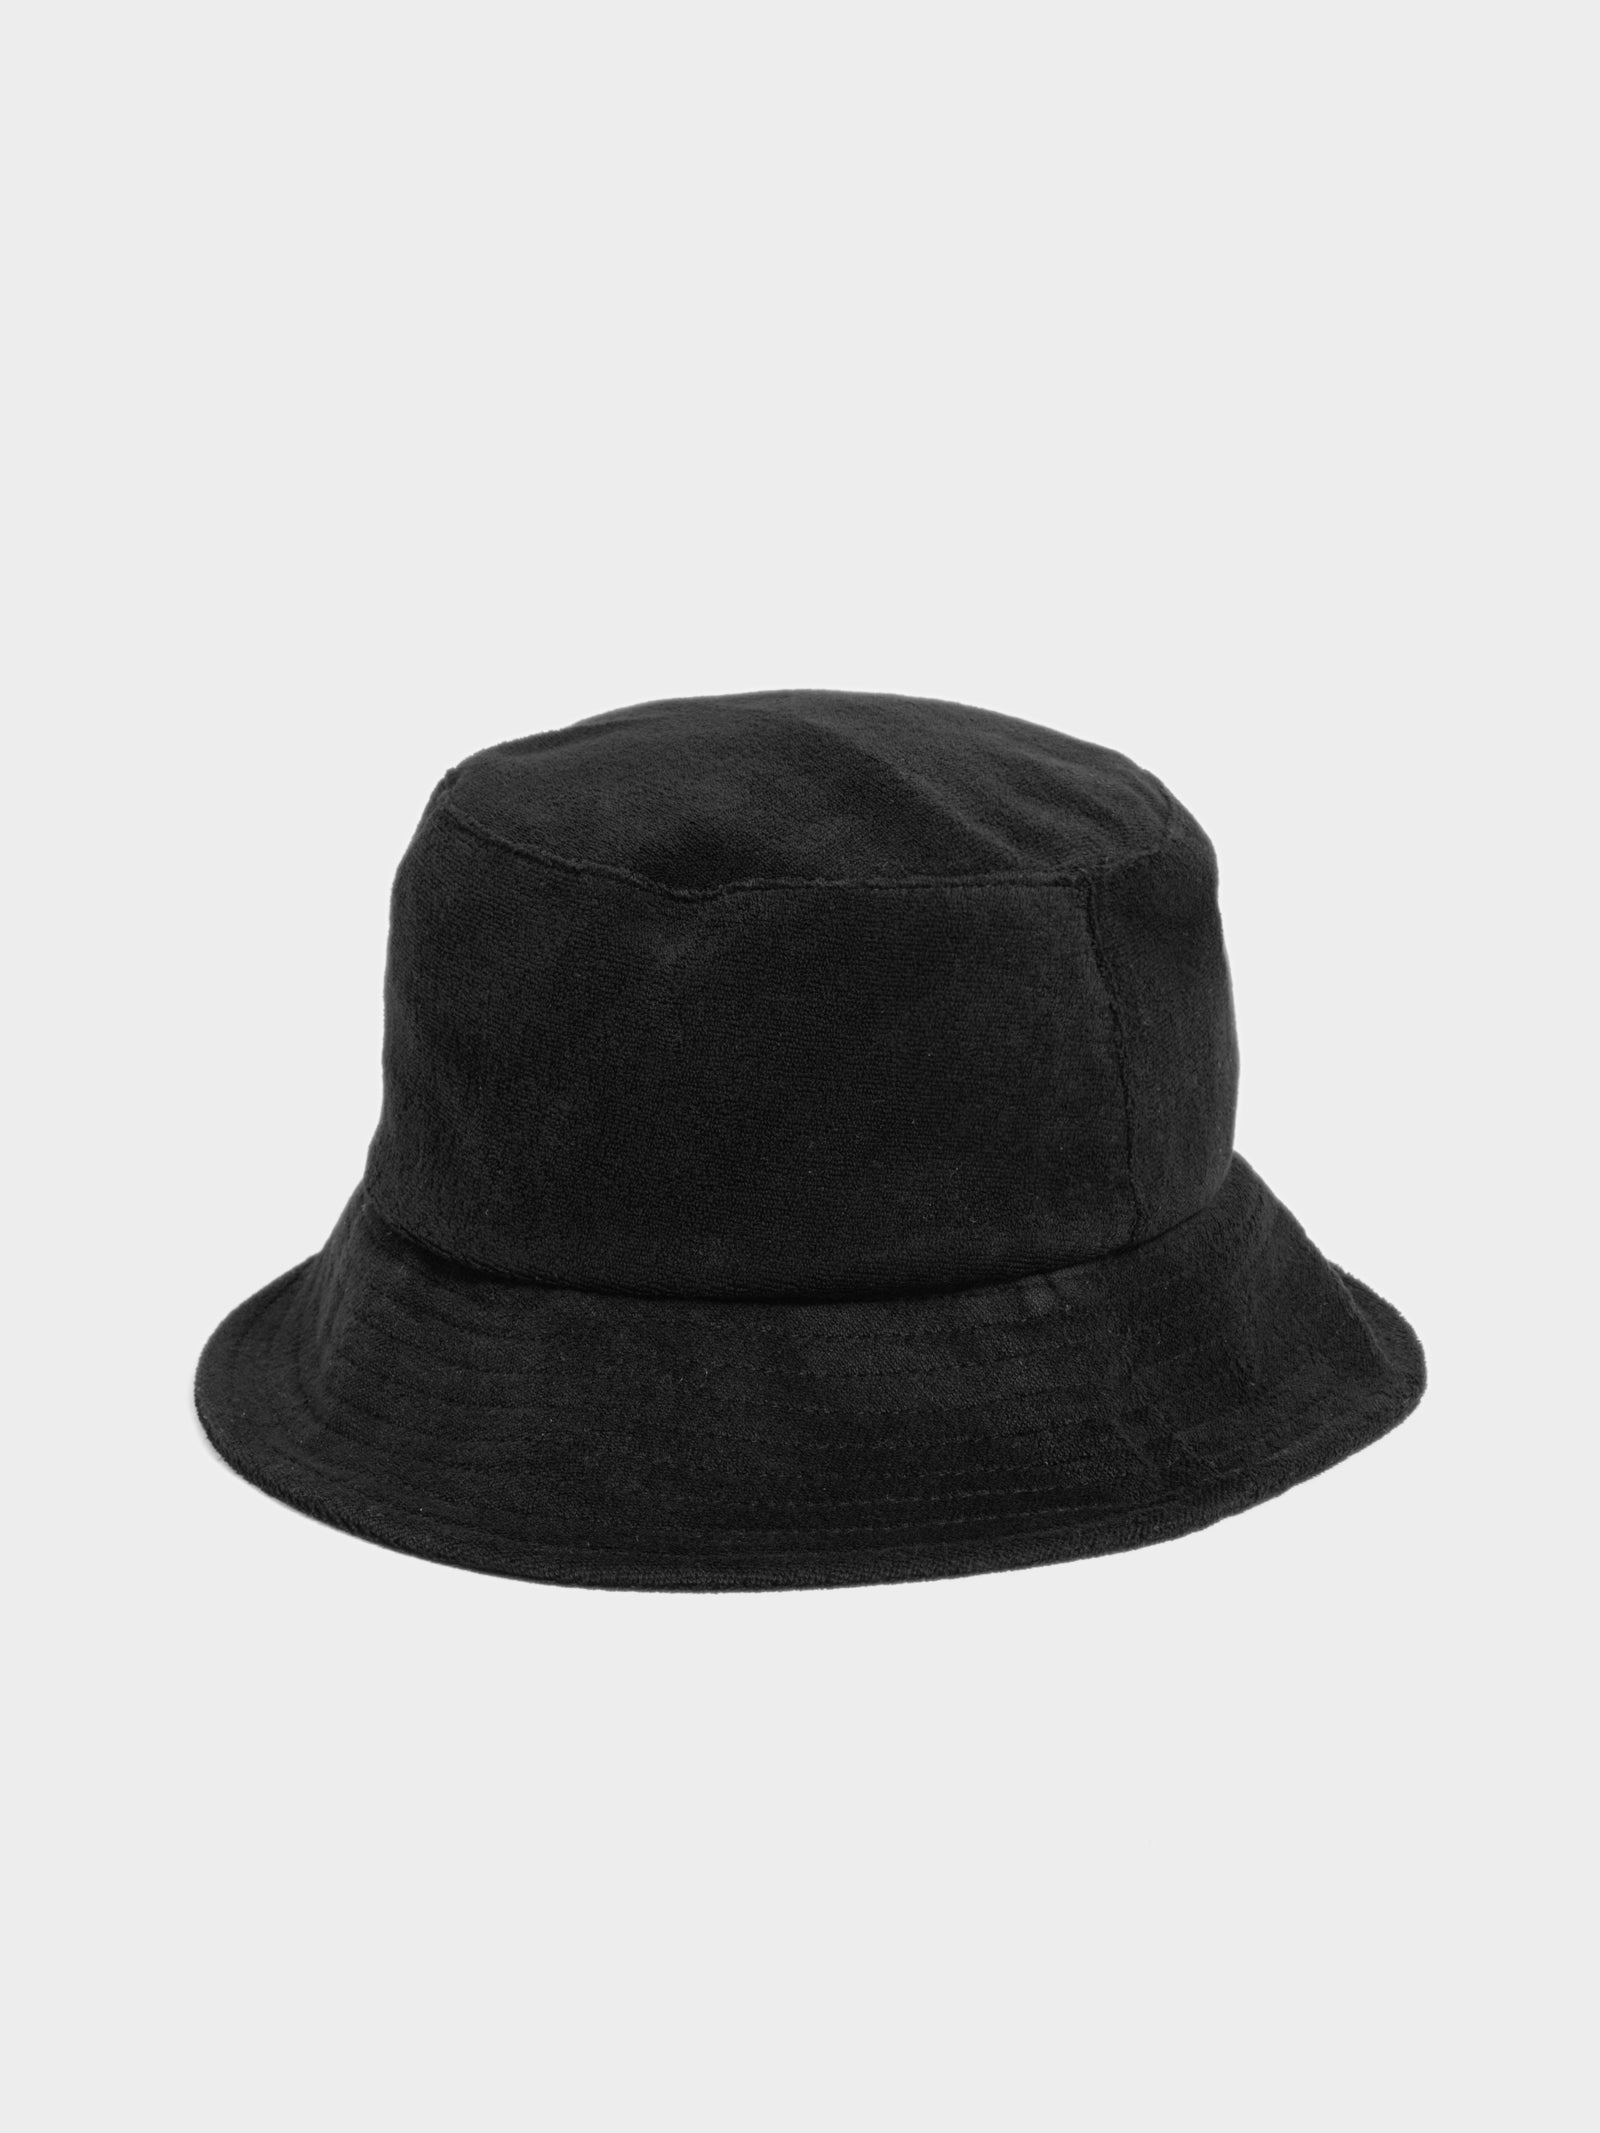 Tobi Bucket Hat in Black - Glue Store